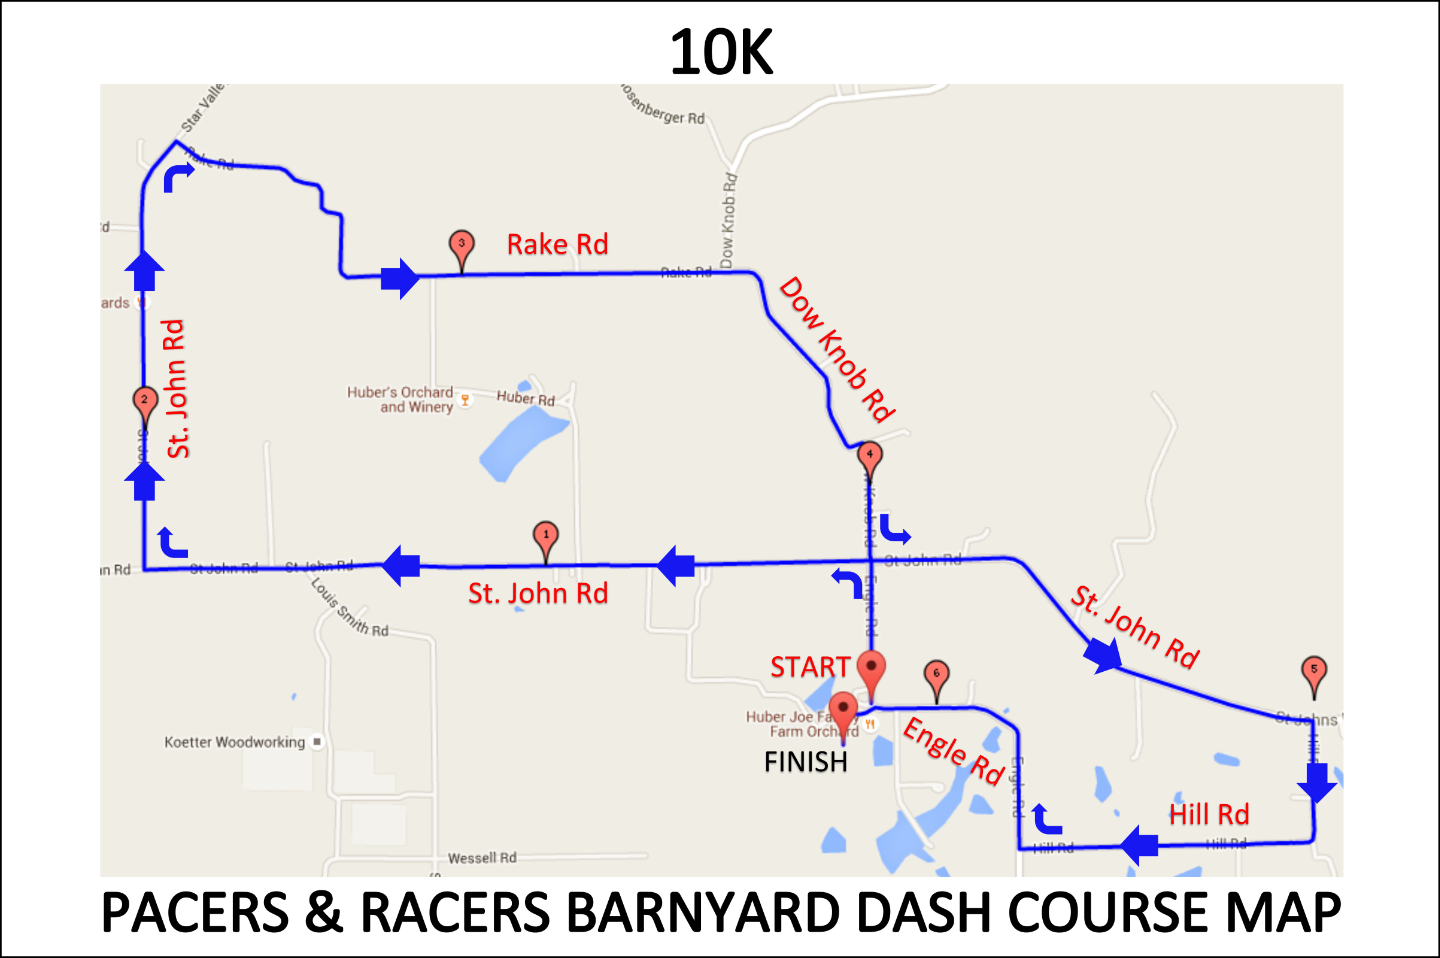 10K Barnyard Dash Course Map